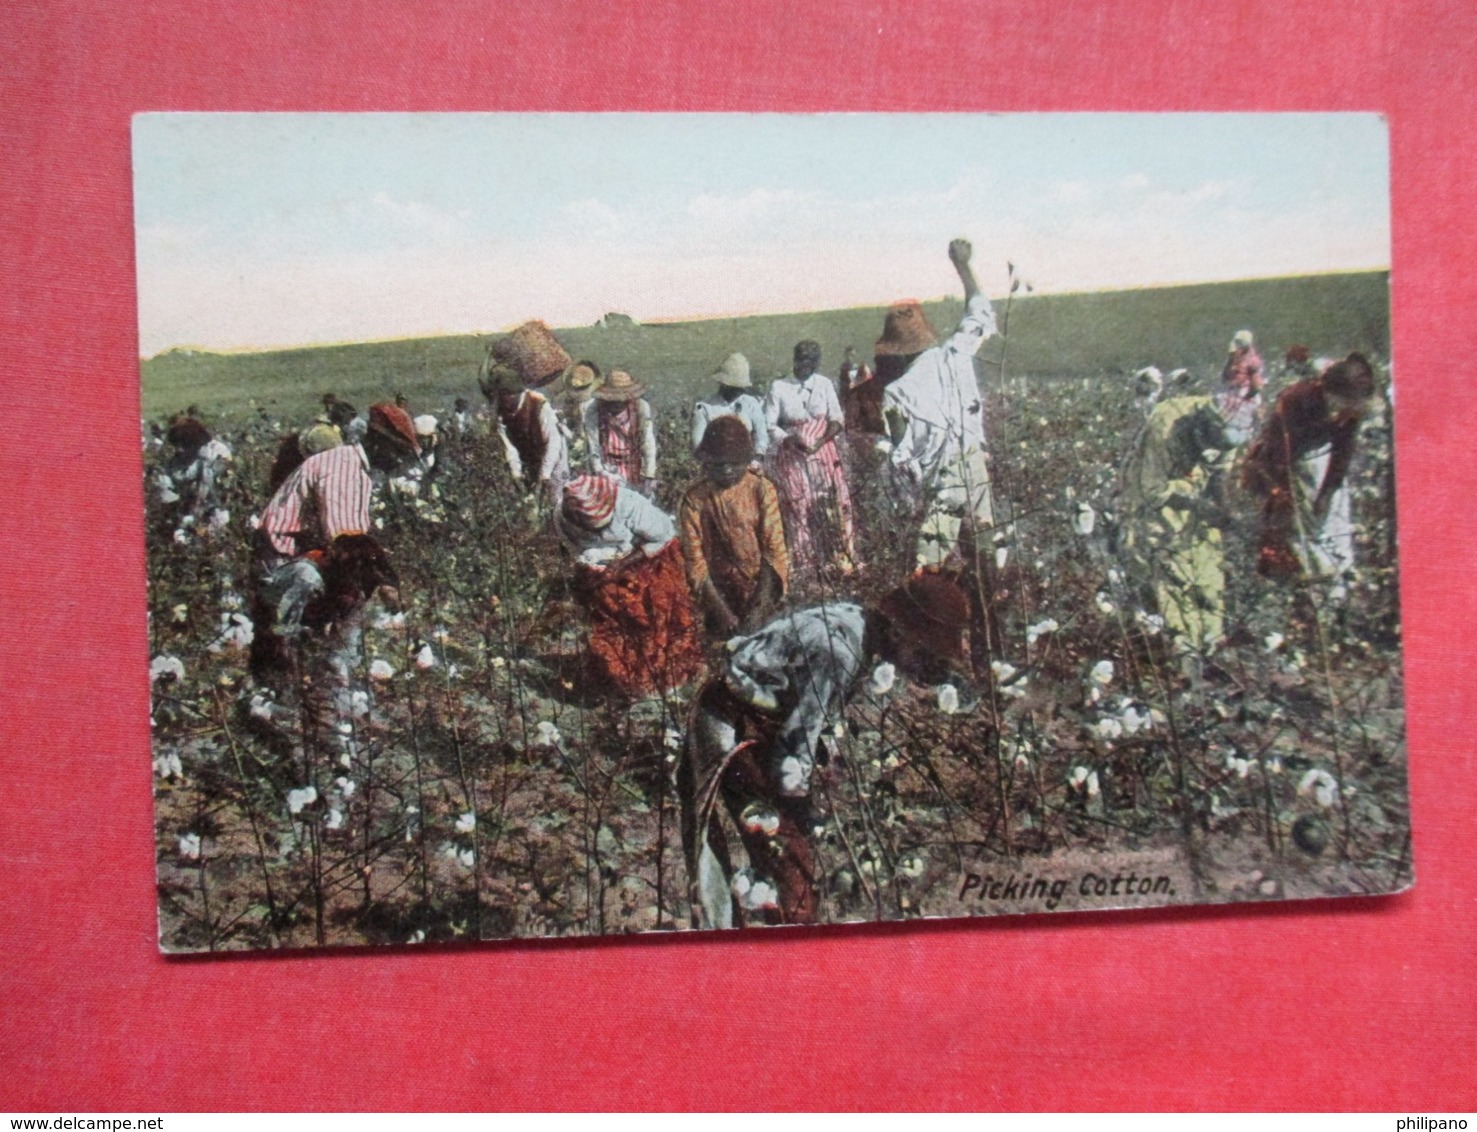 Black Americana   Picking Cotton  Ref 3722 - Black Americana